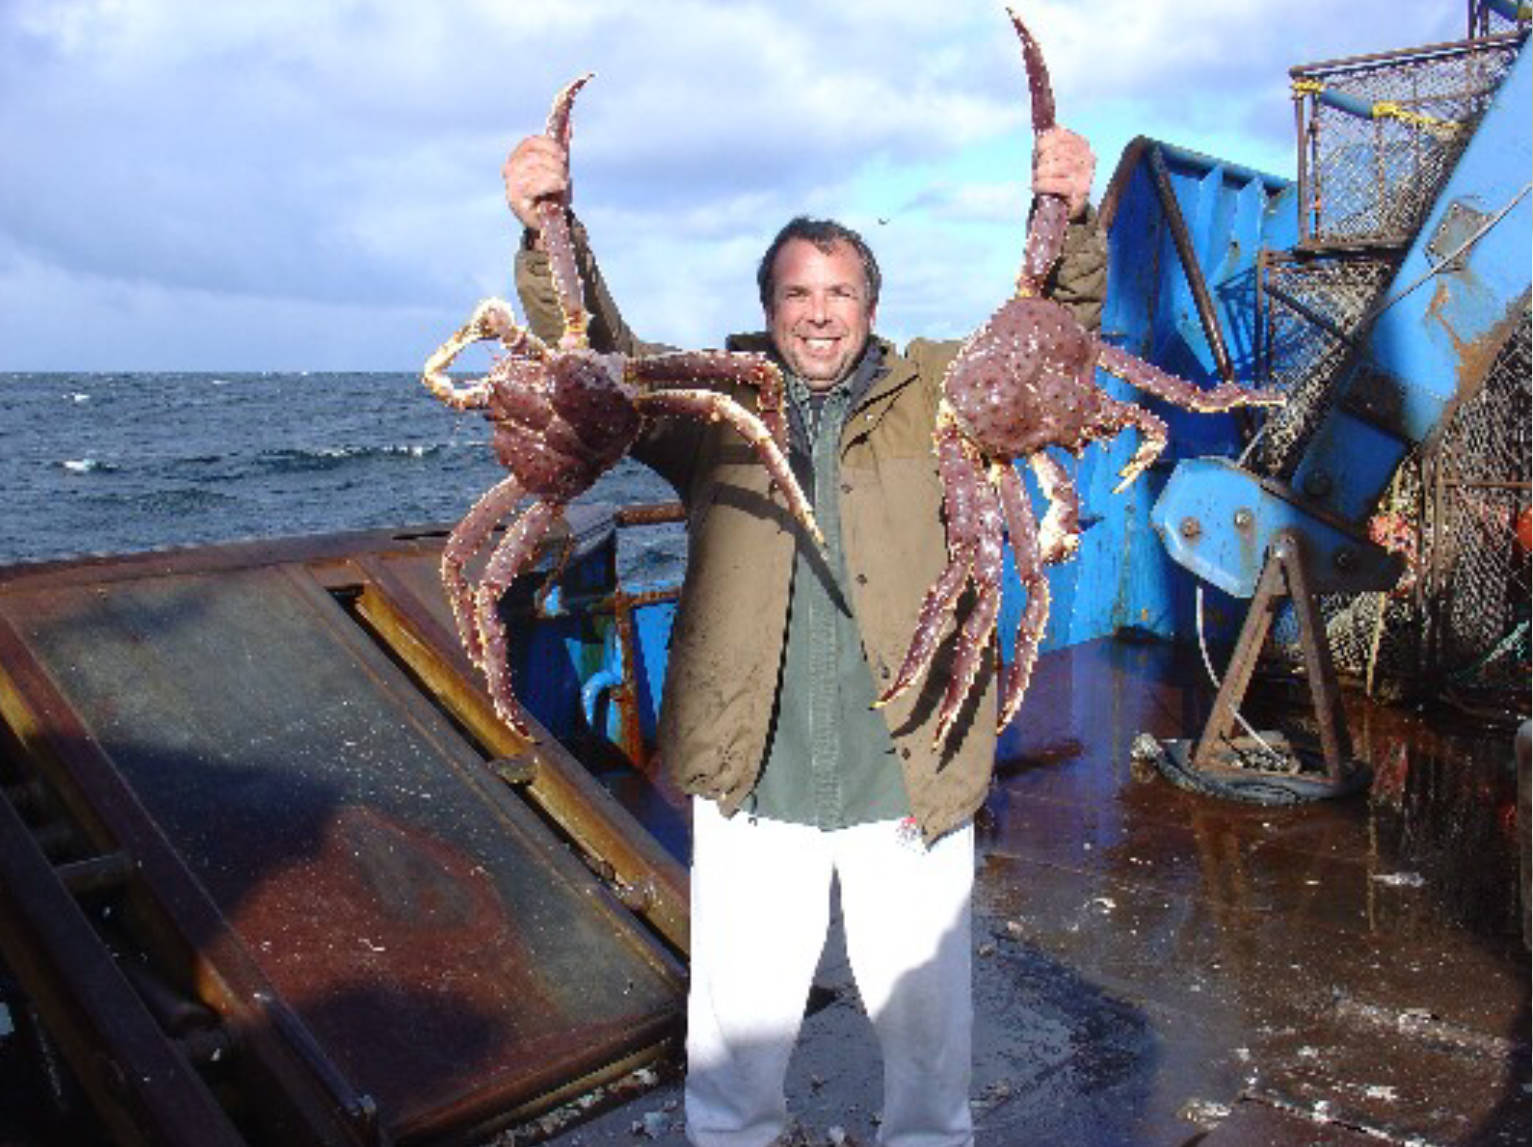 Dungeness Gear Works Presidence Lance Nylander hoists two Alaskan blue king crabs.